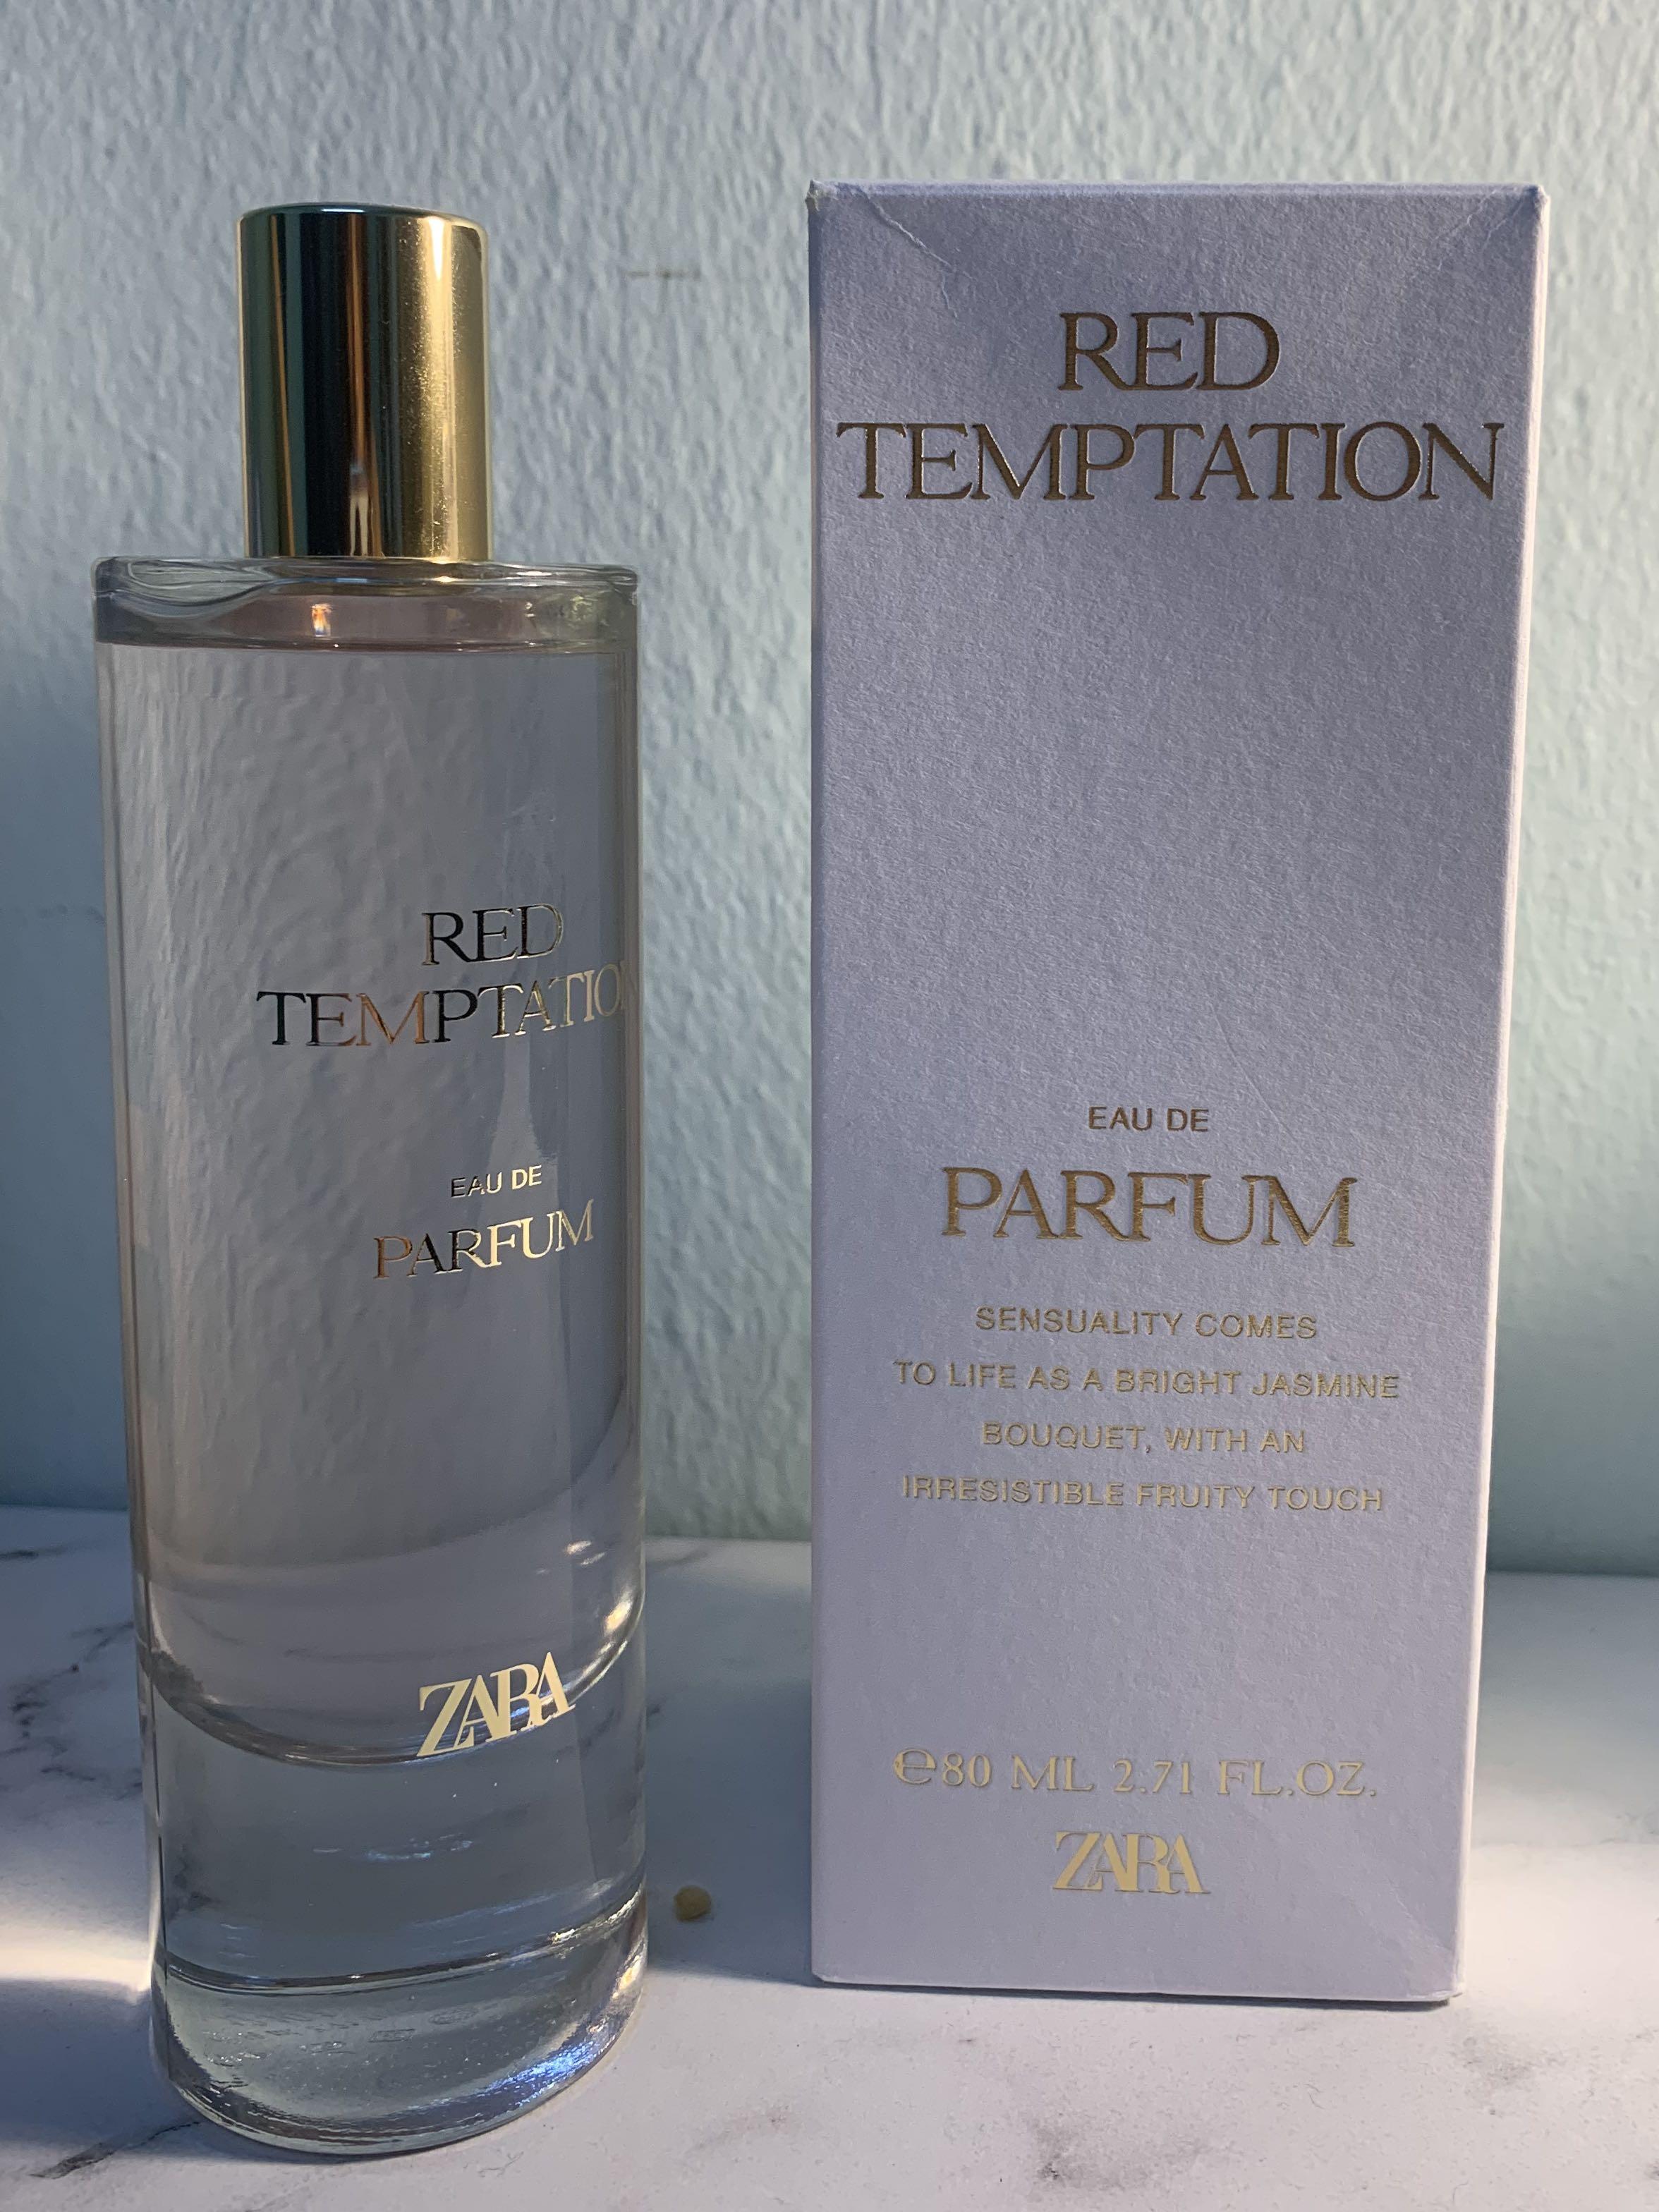 red temptation zara perfume dupe